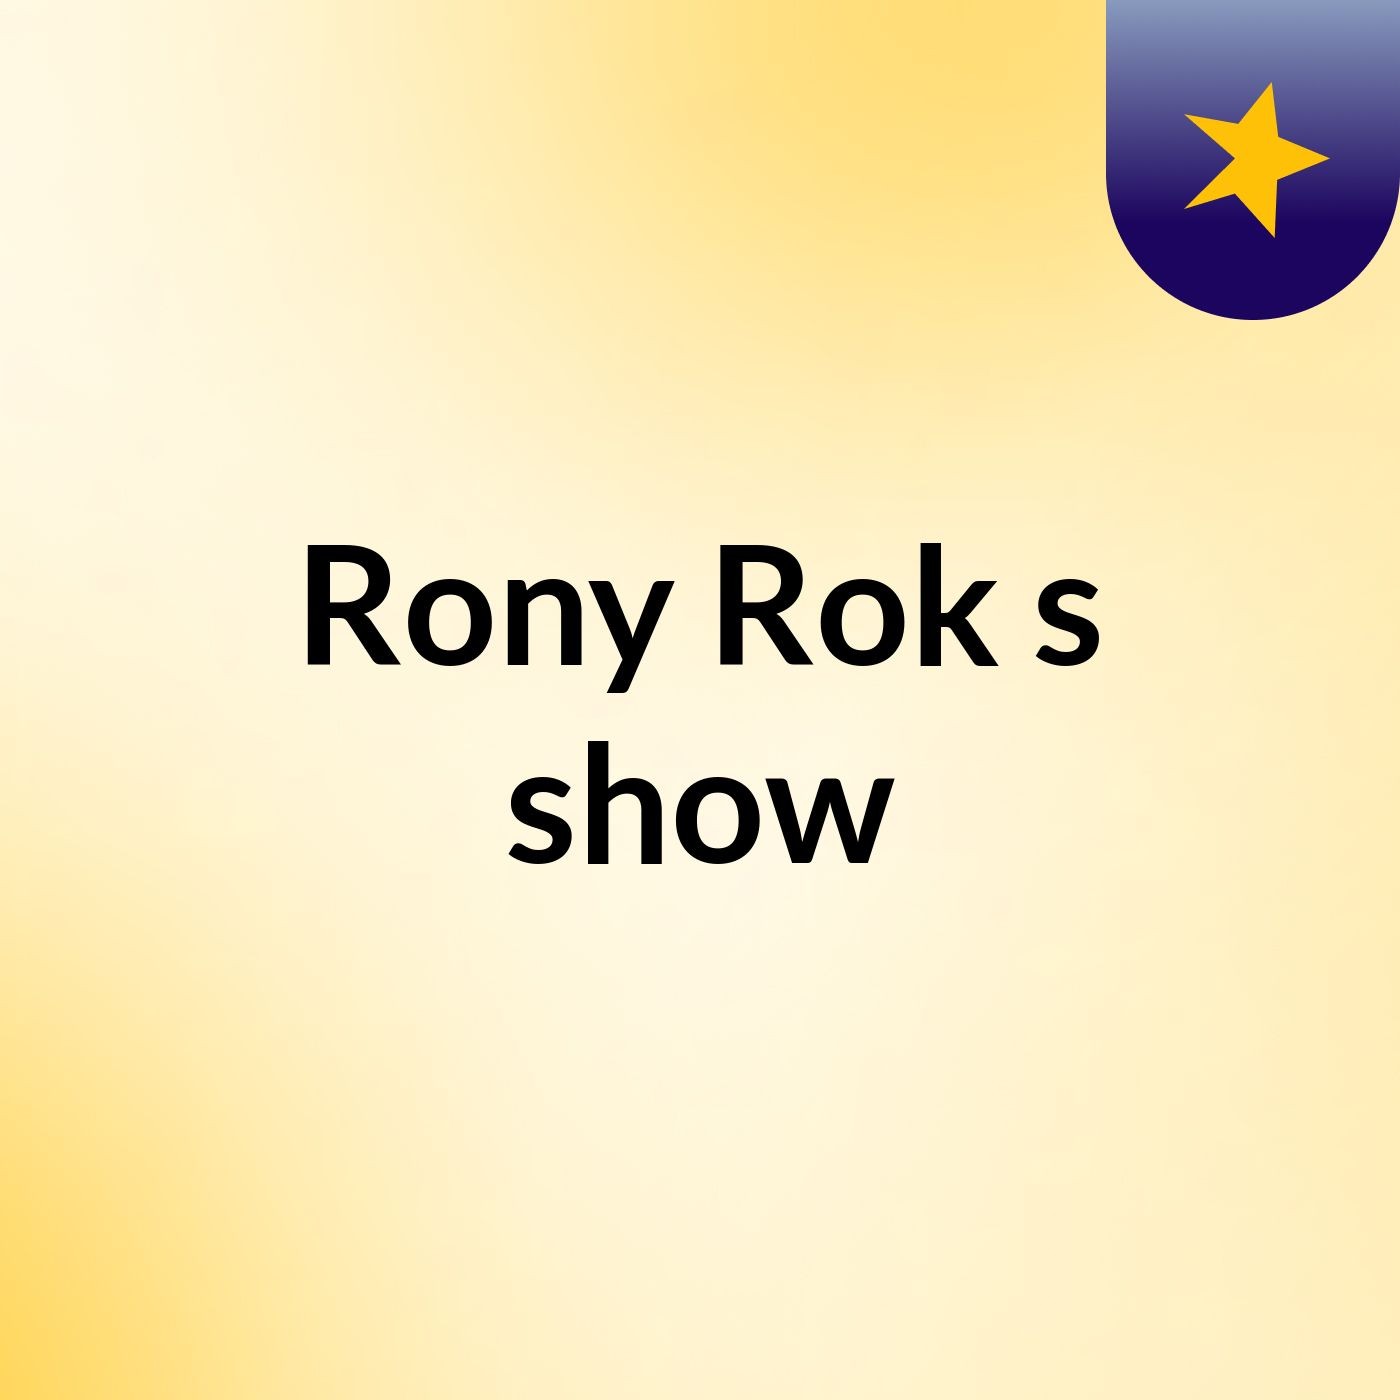 Rony Rok's show